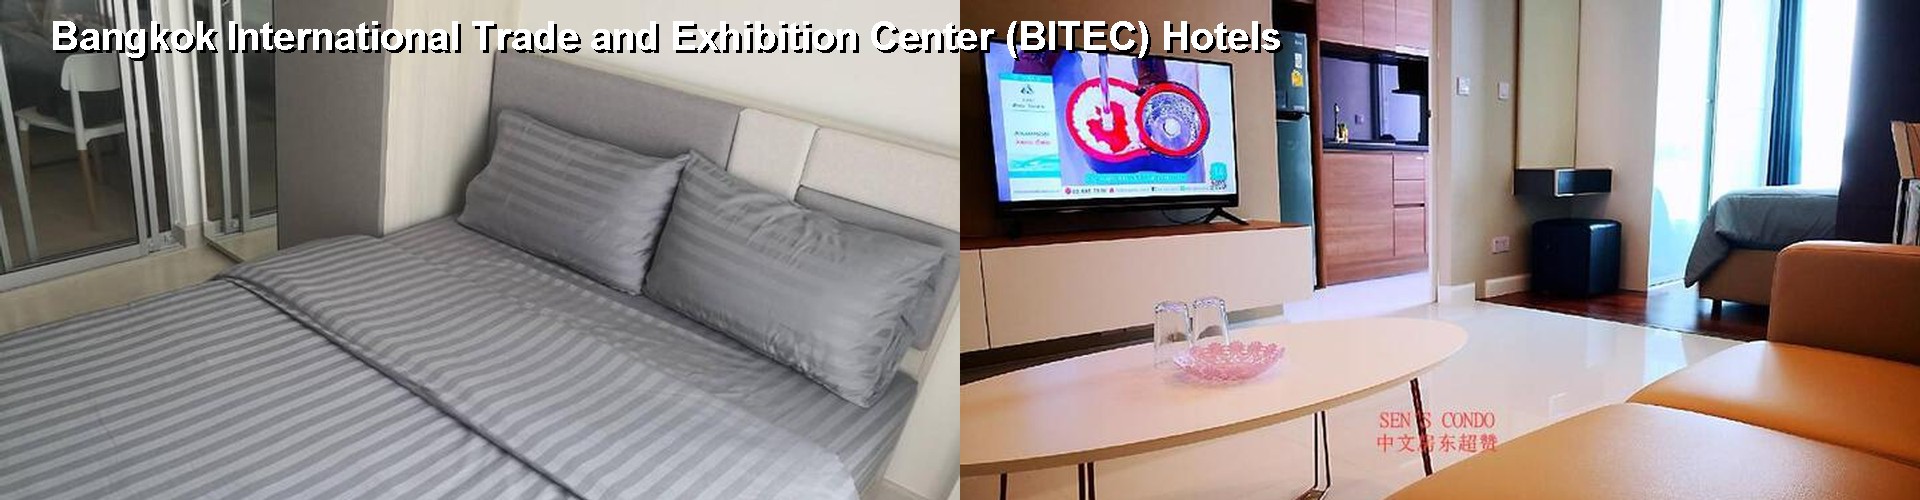 5 Best Hotels near Bangkok International Trade and Exhibition Center (BITEC)